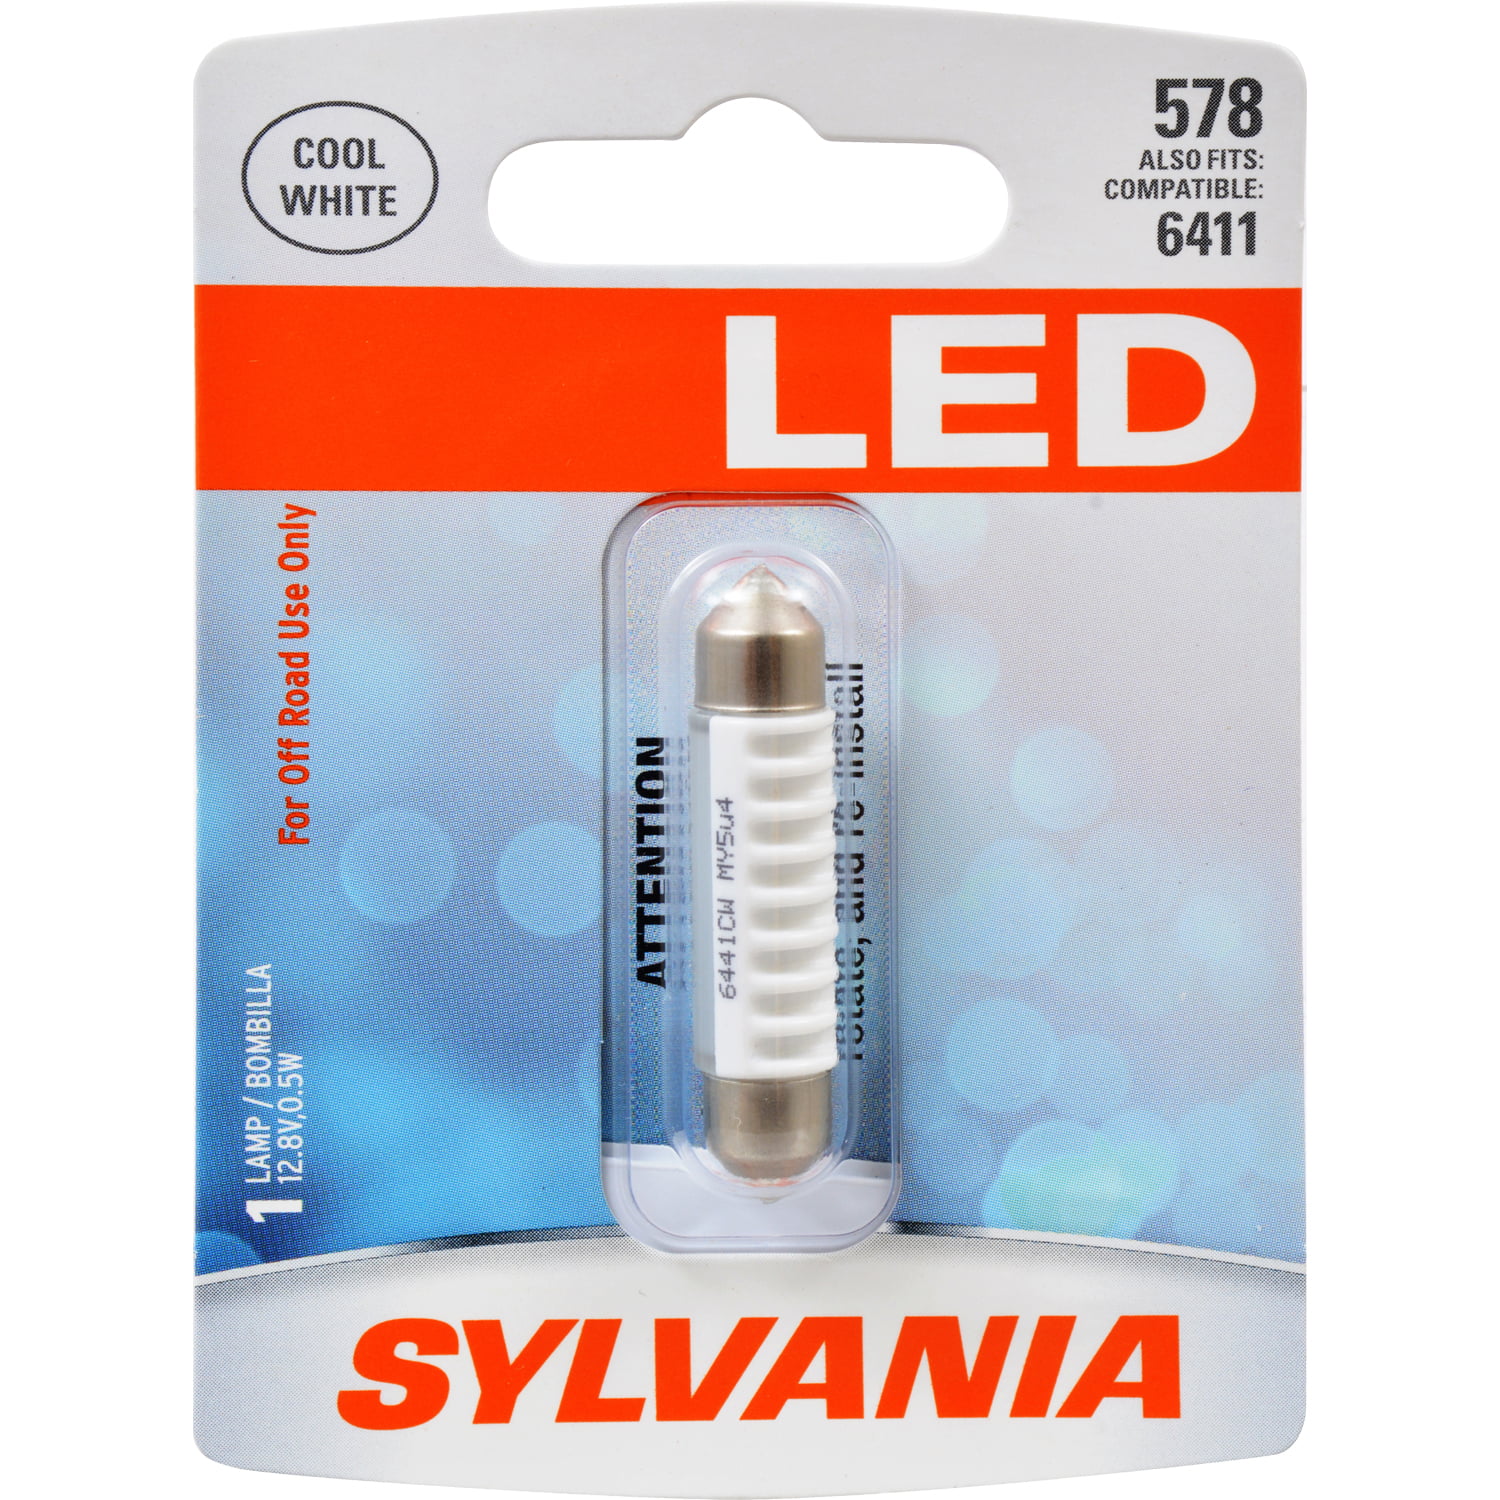 sylvania-578-white-syl-led-mini-bulb-pack-of-1-walmart